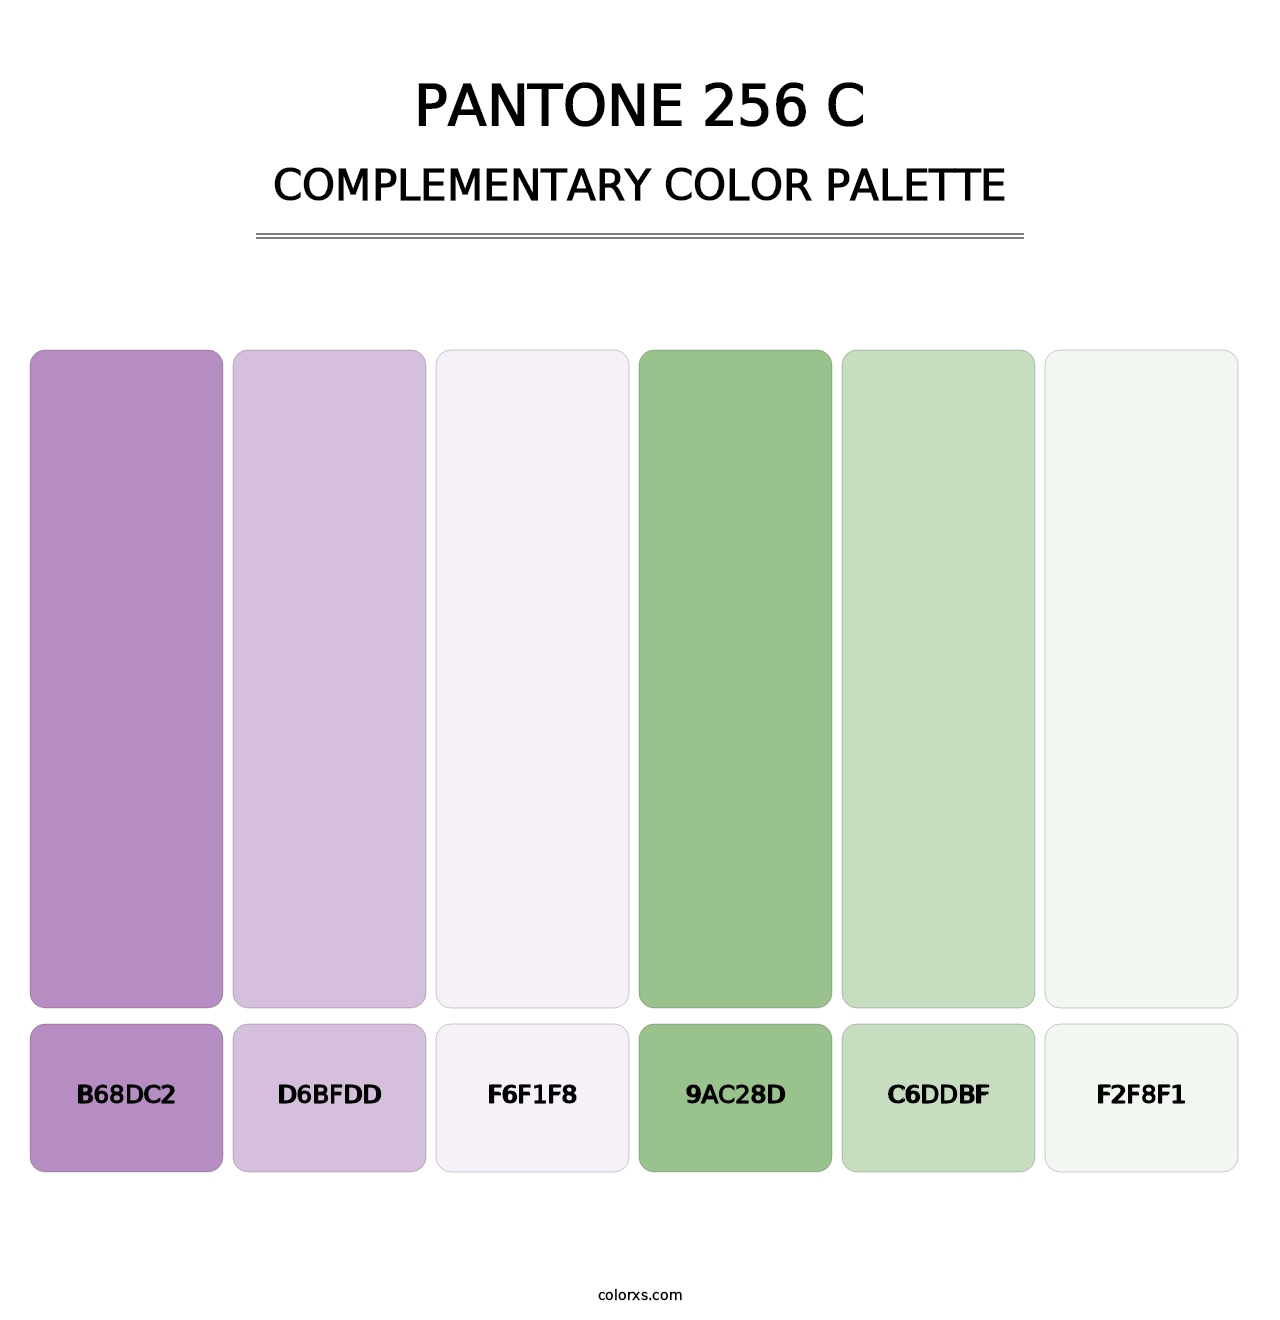 PANTONE 256 C - Complementary Color Palette